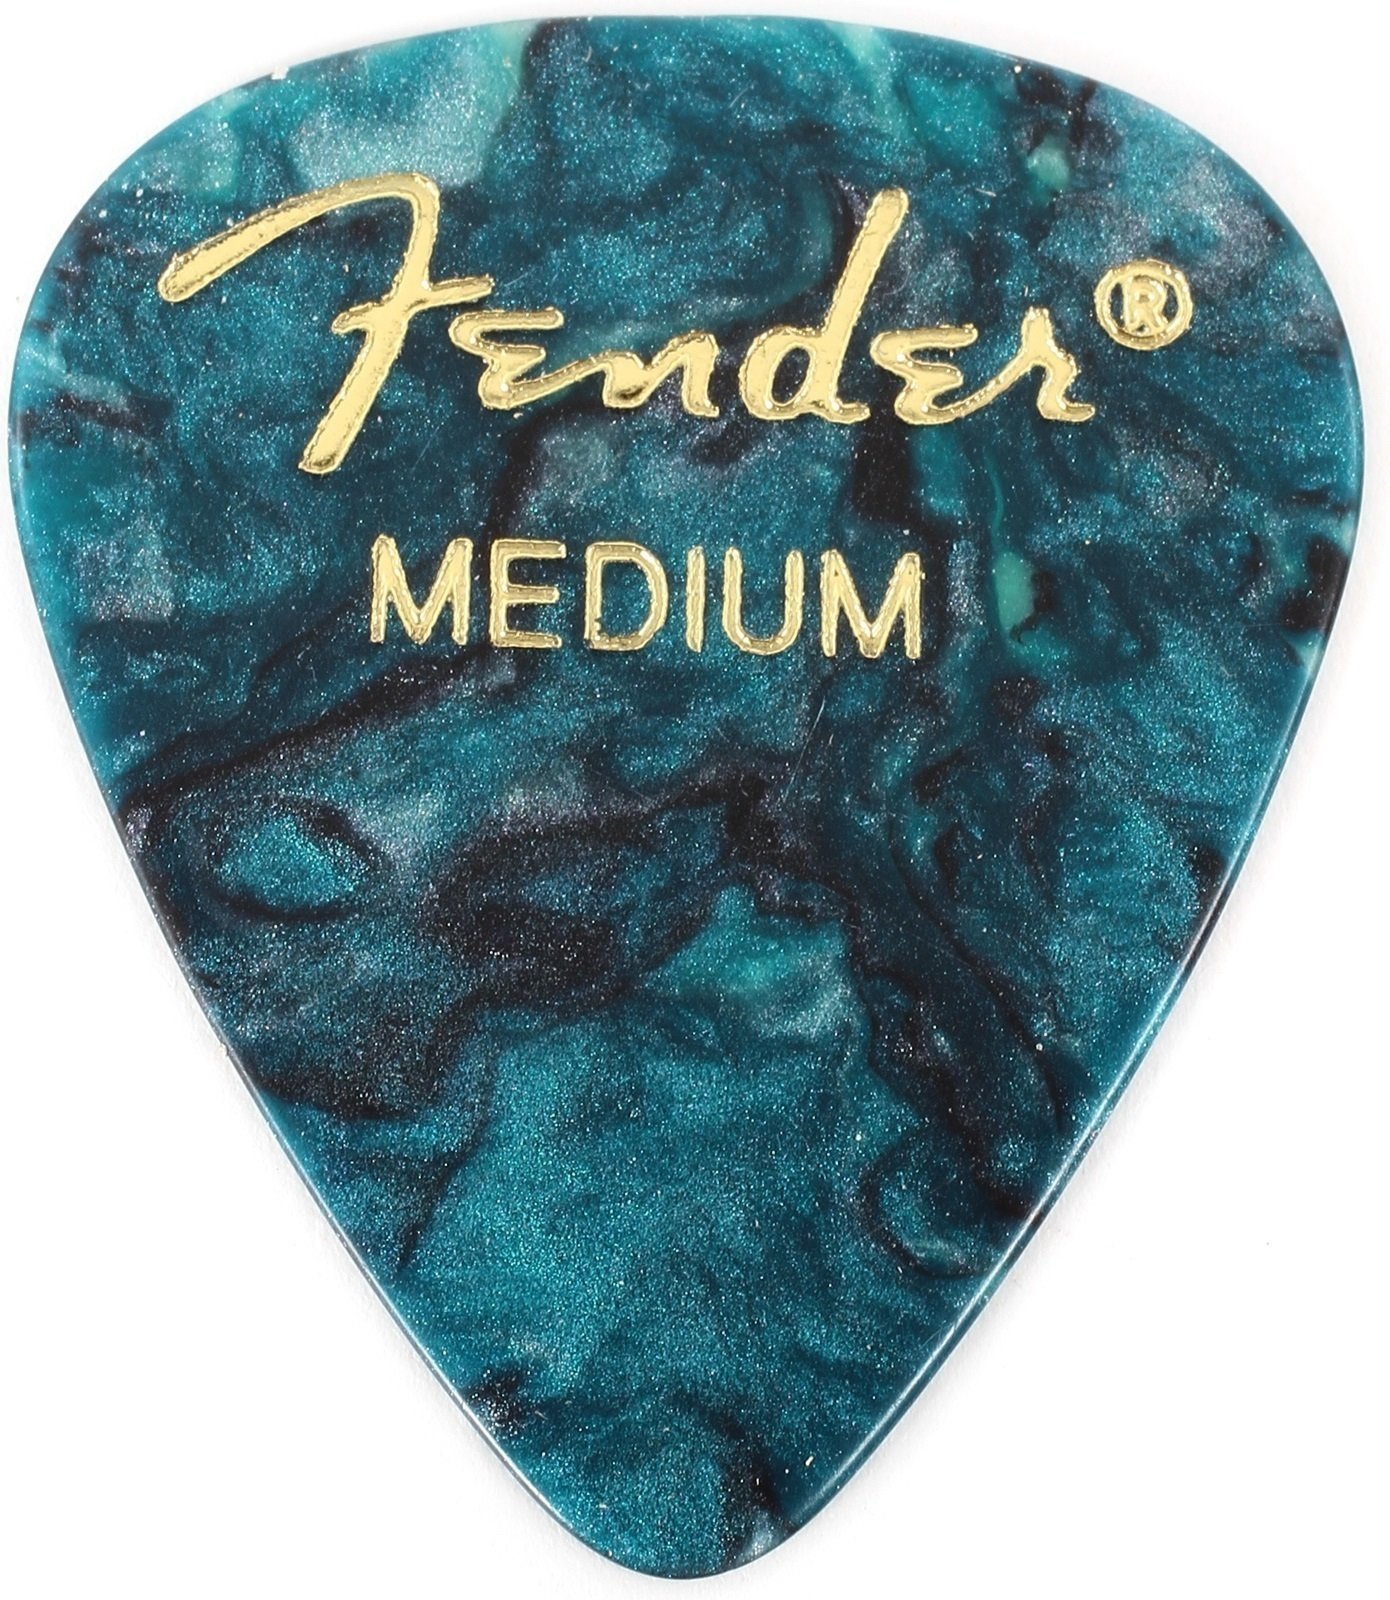 Pengető Fender 351 Shape Premium M Pengető